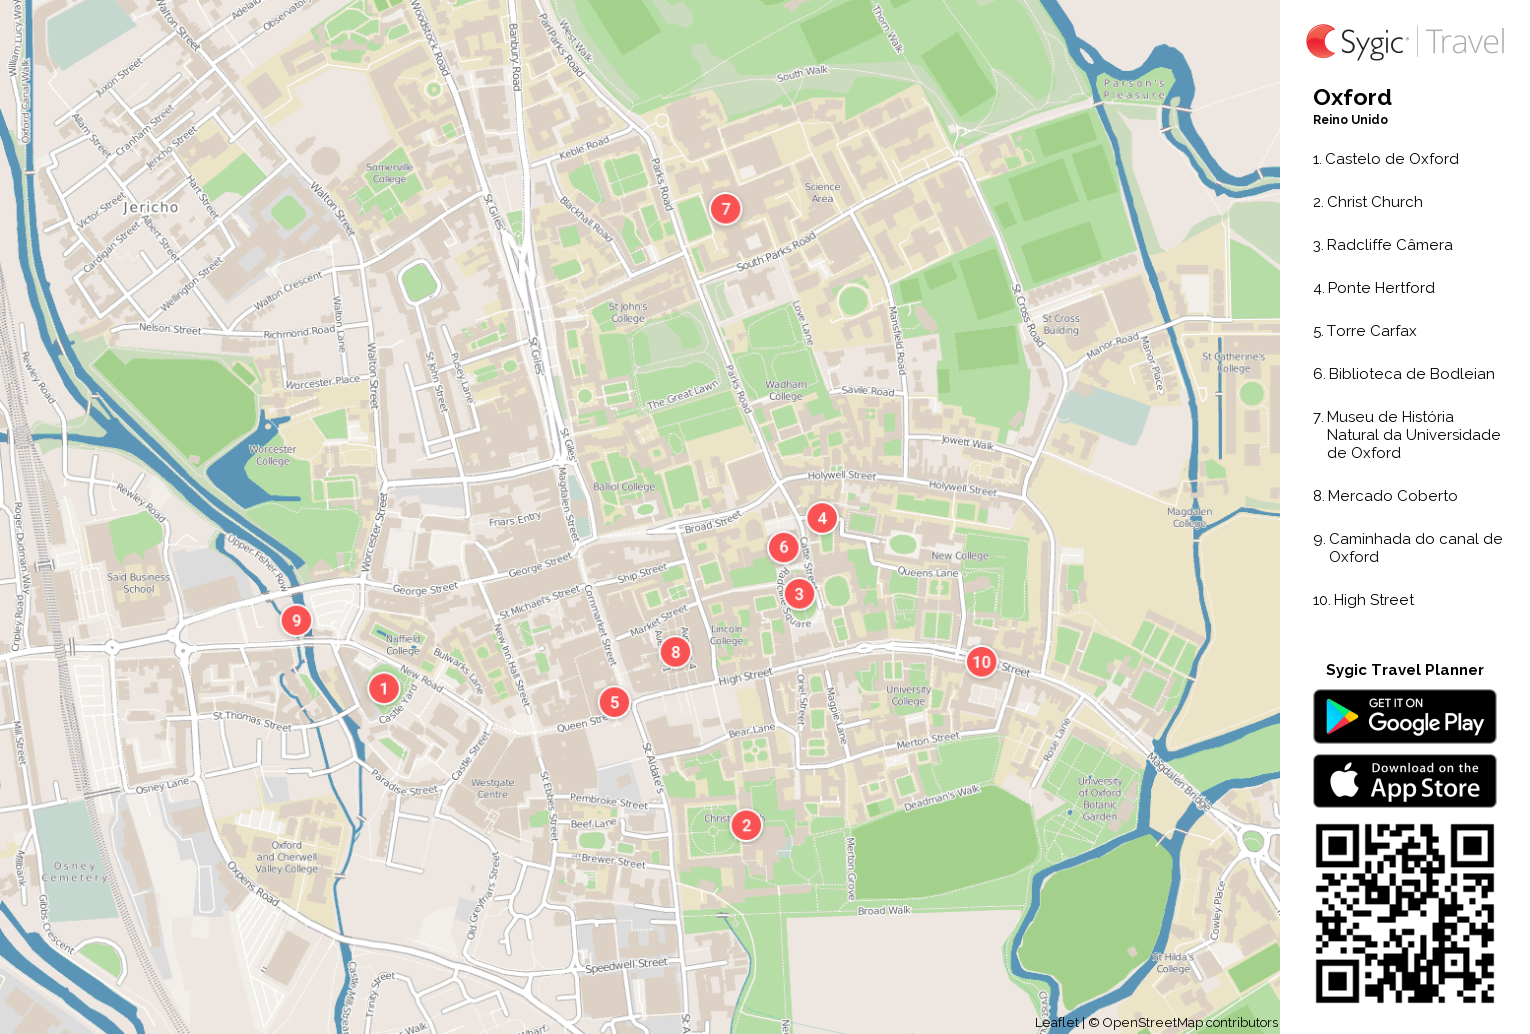 oxford-mapa-turistico-em-pdf